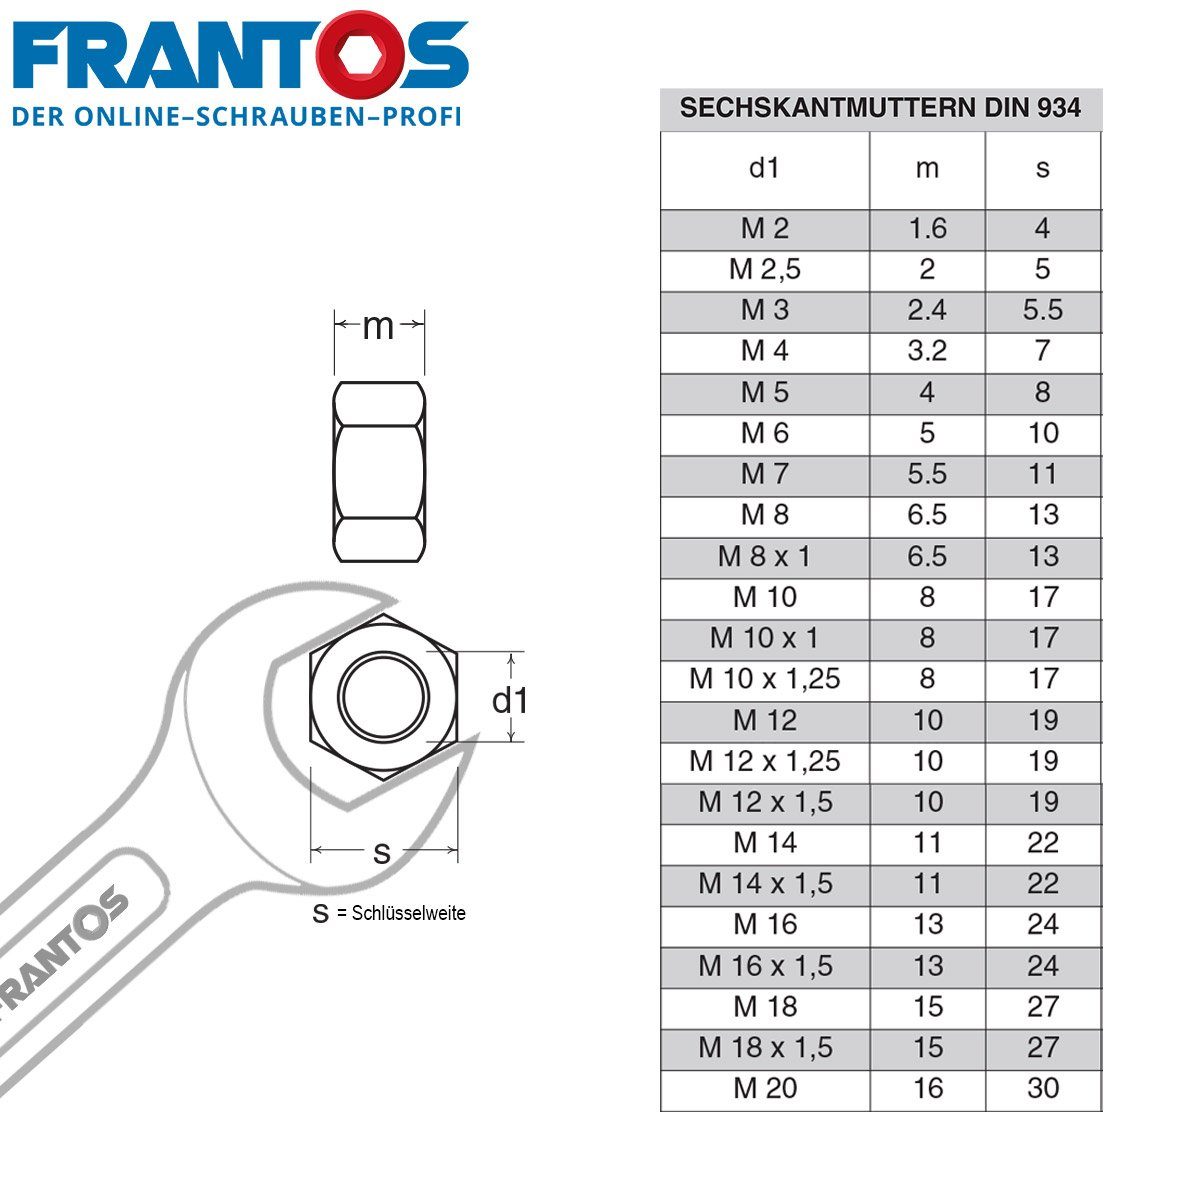 FRANTOS Sechskantmutter DIN 934 10er - A2 Muttern, M20, Sechskantmuttern Edelstahl Pack M2